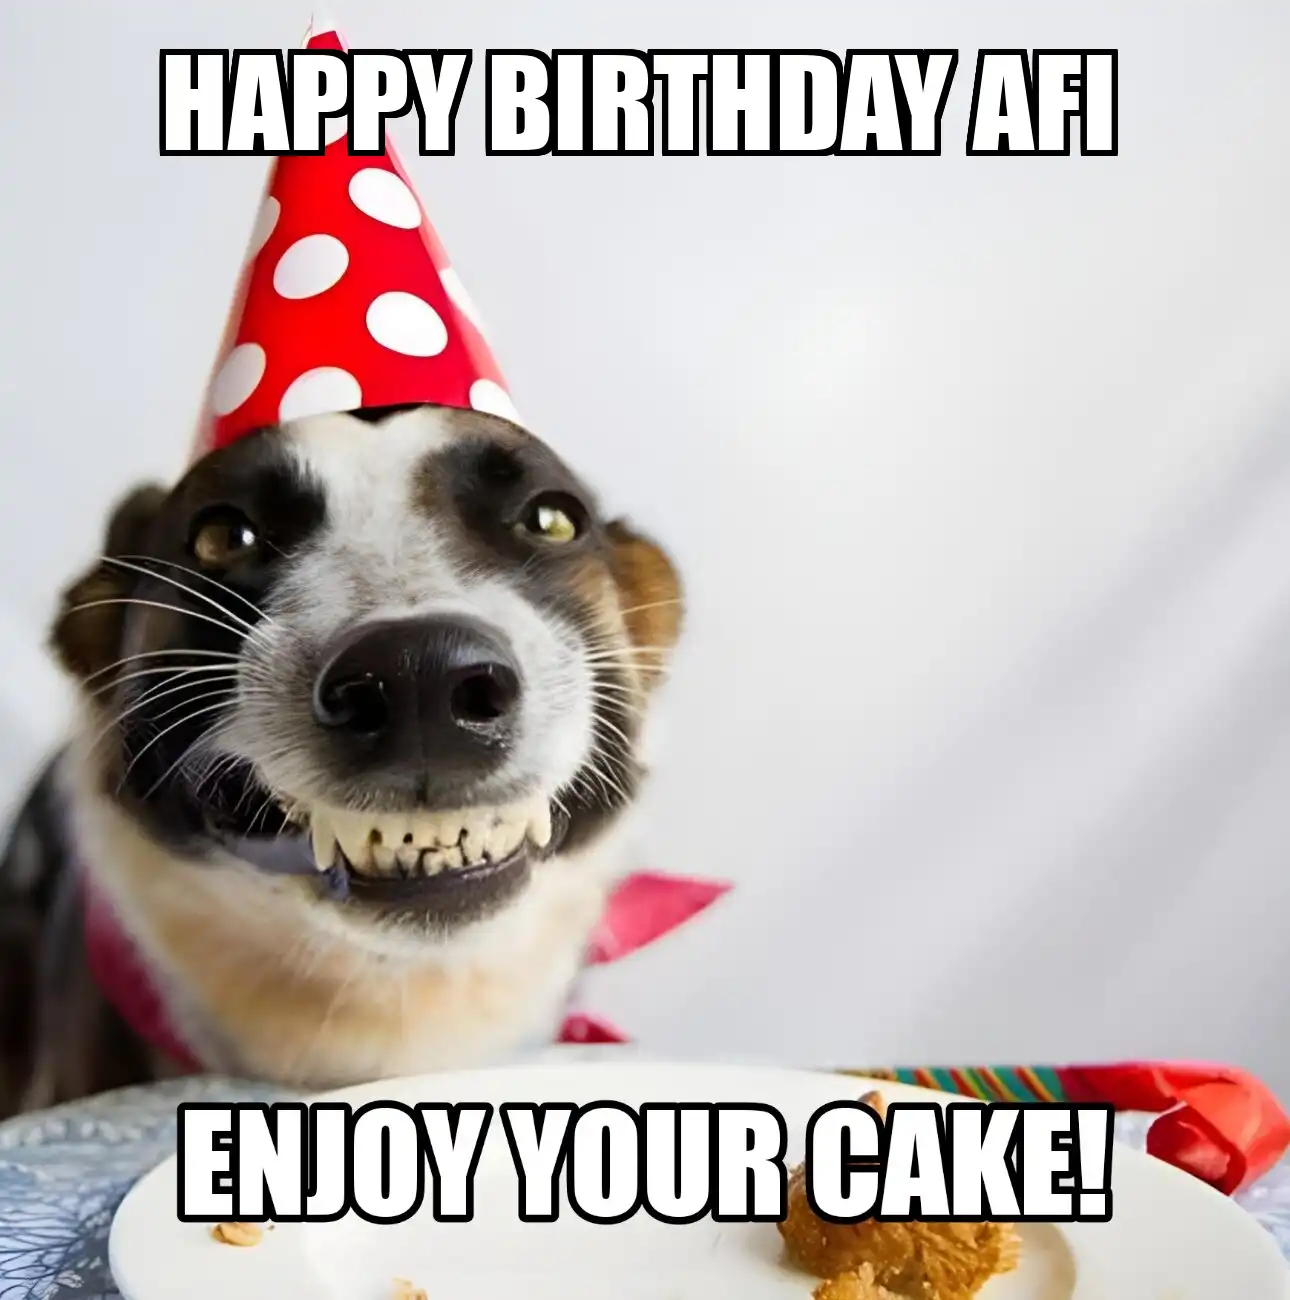 Happy Birthday Afi Enjoy Your Cake Dog Meme